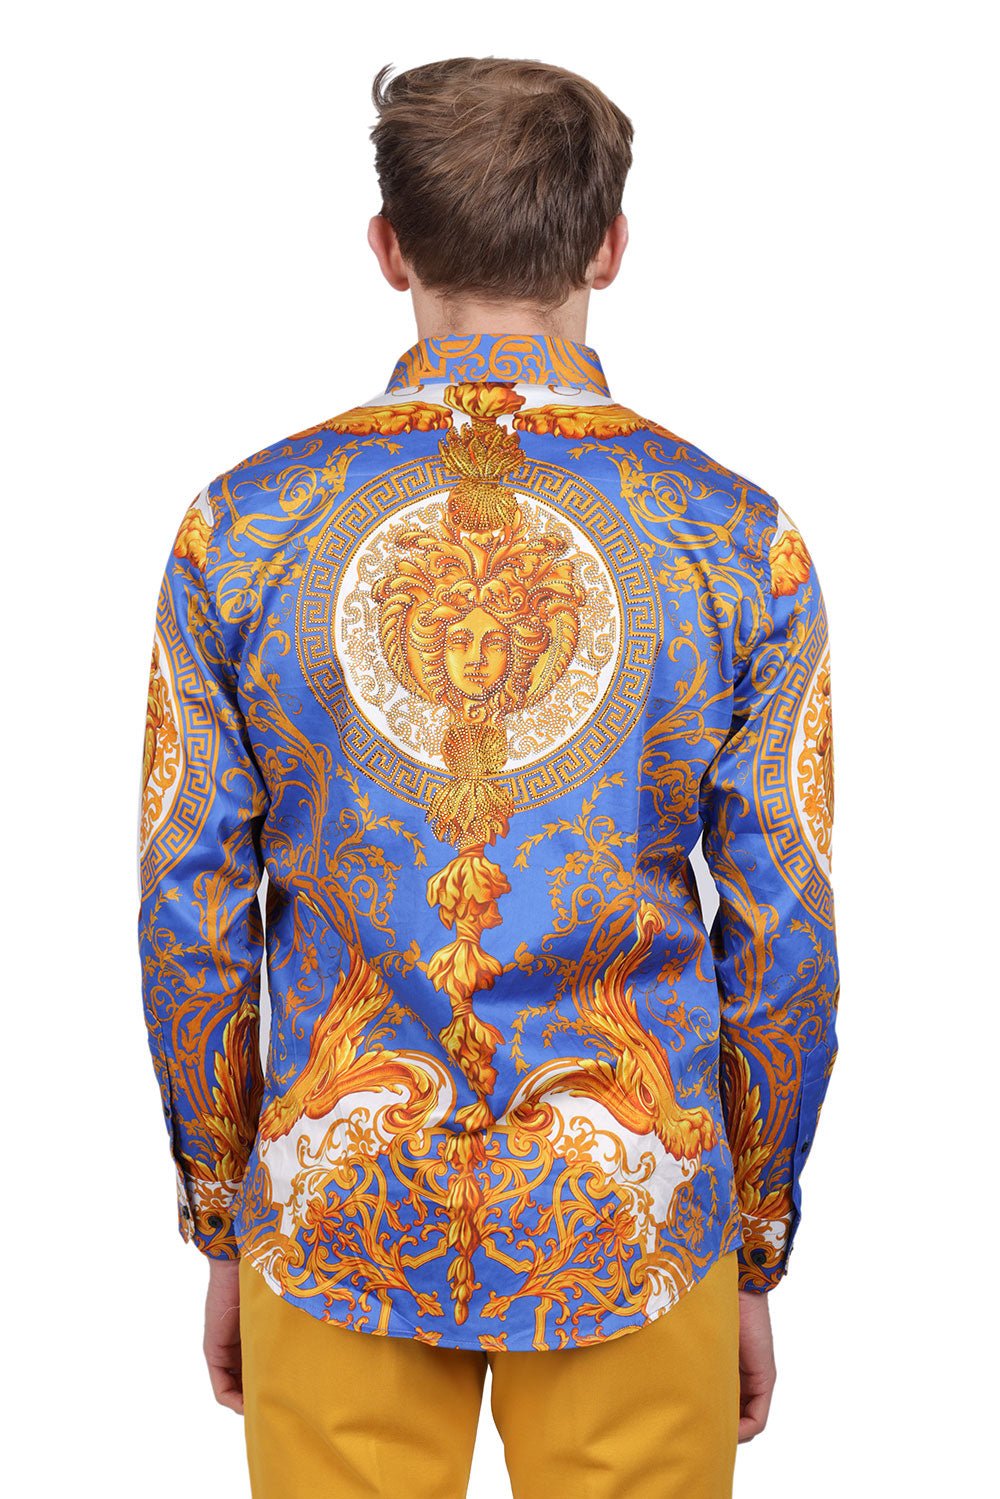 BARABAS Men Medusa Floral Print Design Button Down Luxury Shirt SPR265 Royal